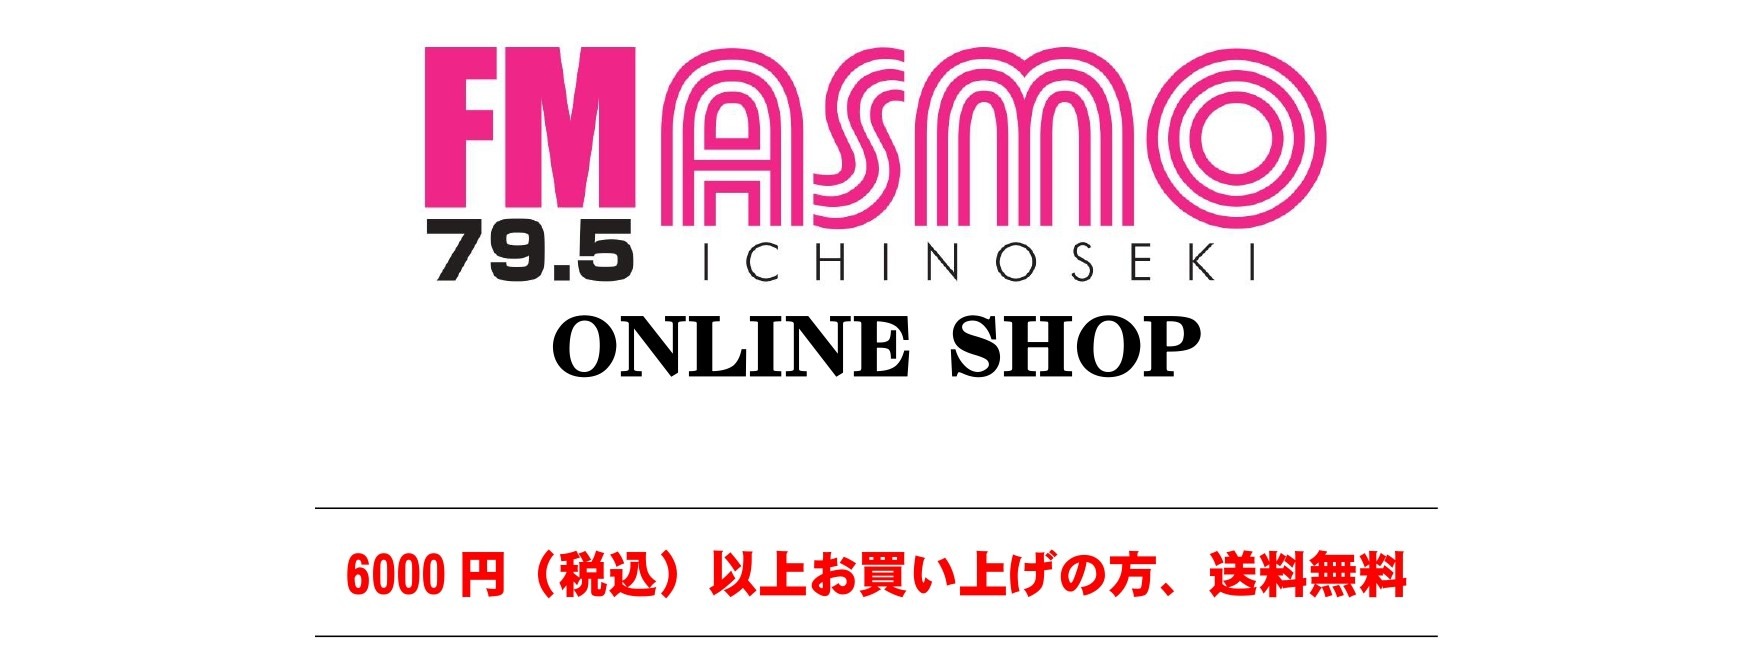 FMasmo online shop